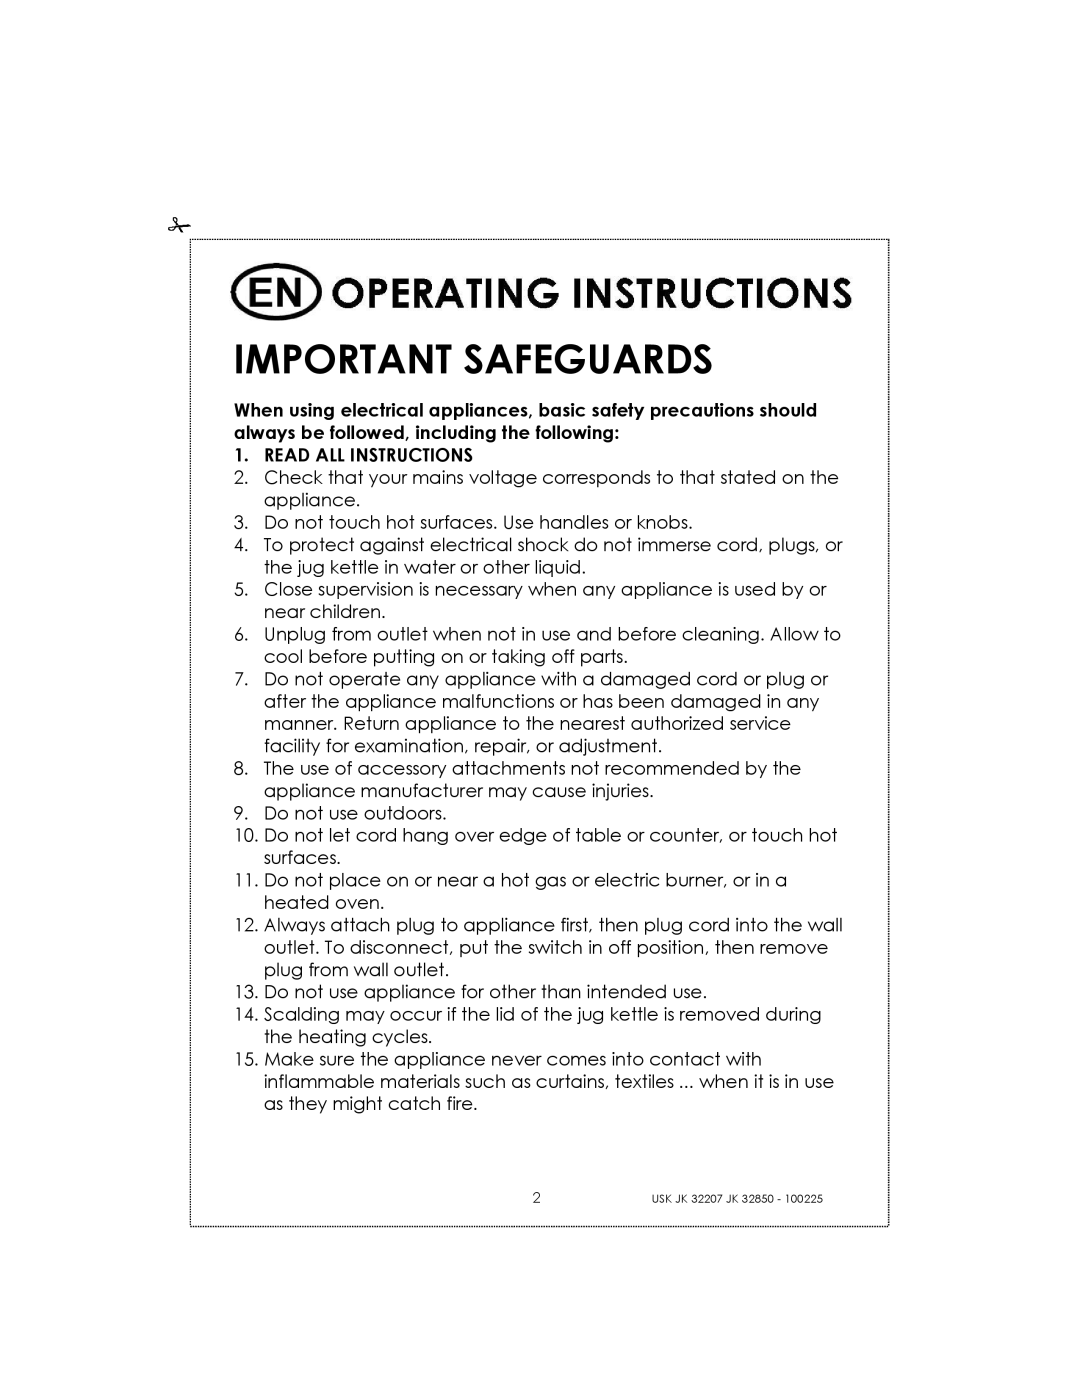 Kalorik USK JK 32850, USK JK 32207 manual Important Safeguards 